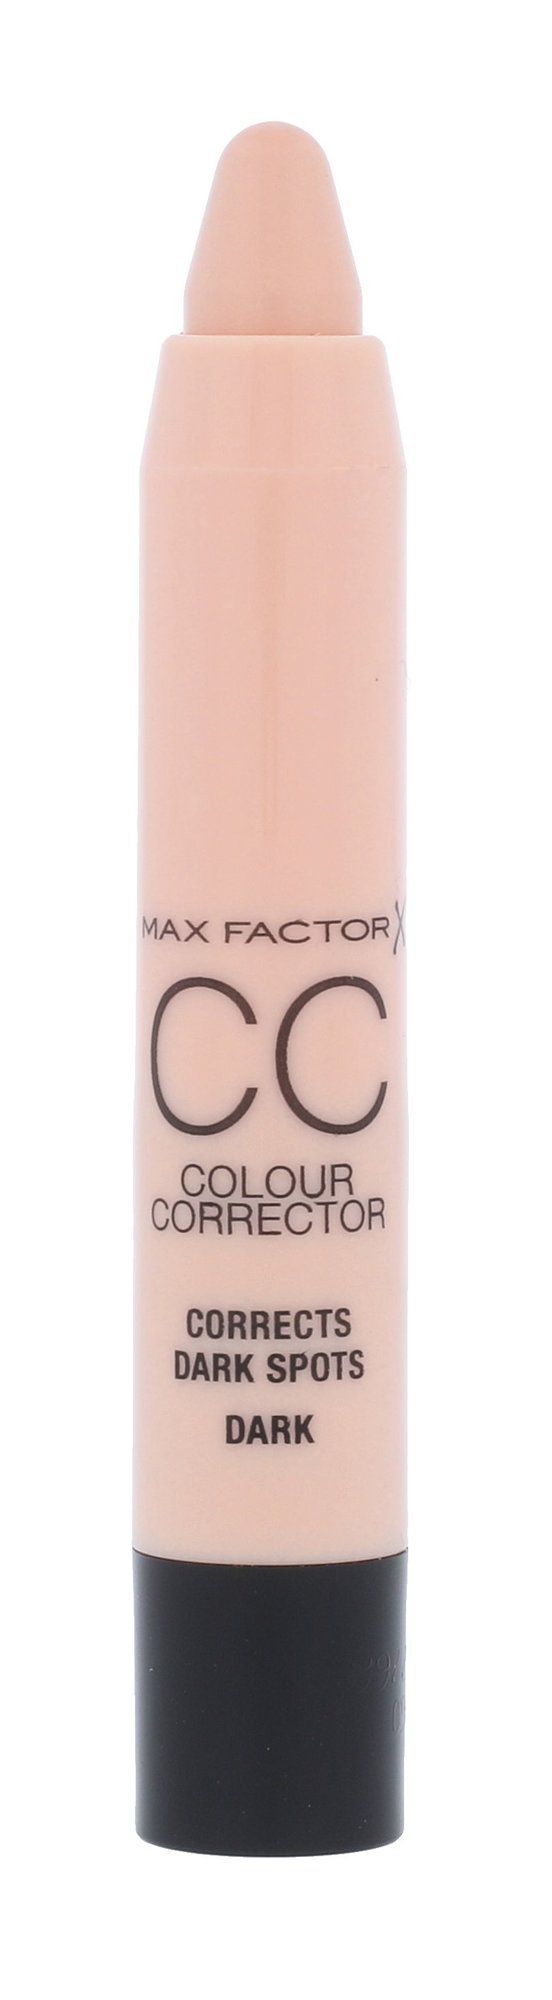 Max Factor CC Colour Corrector korektorius